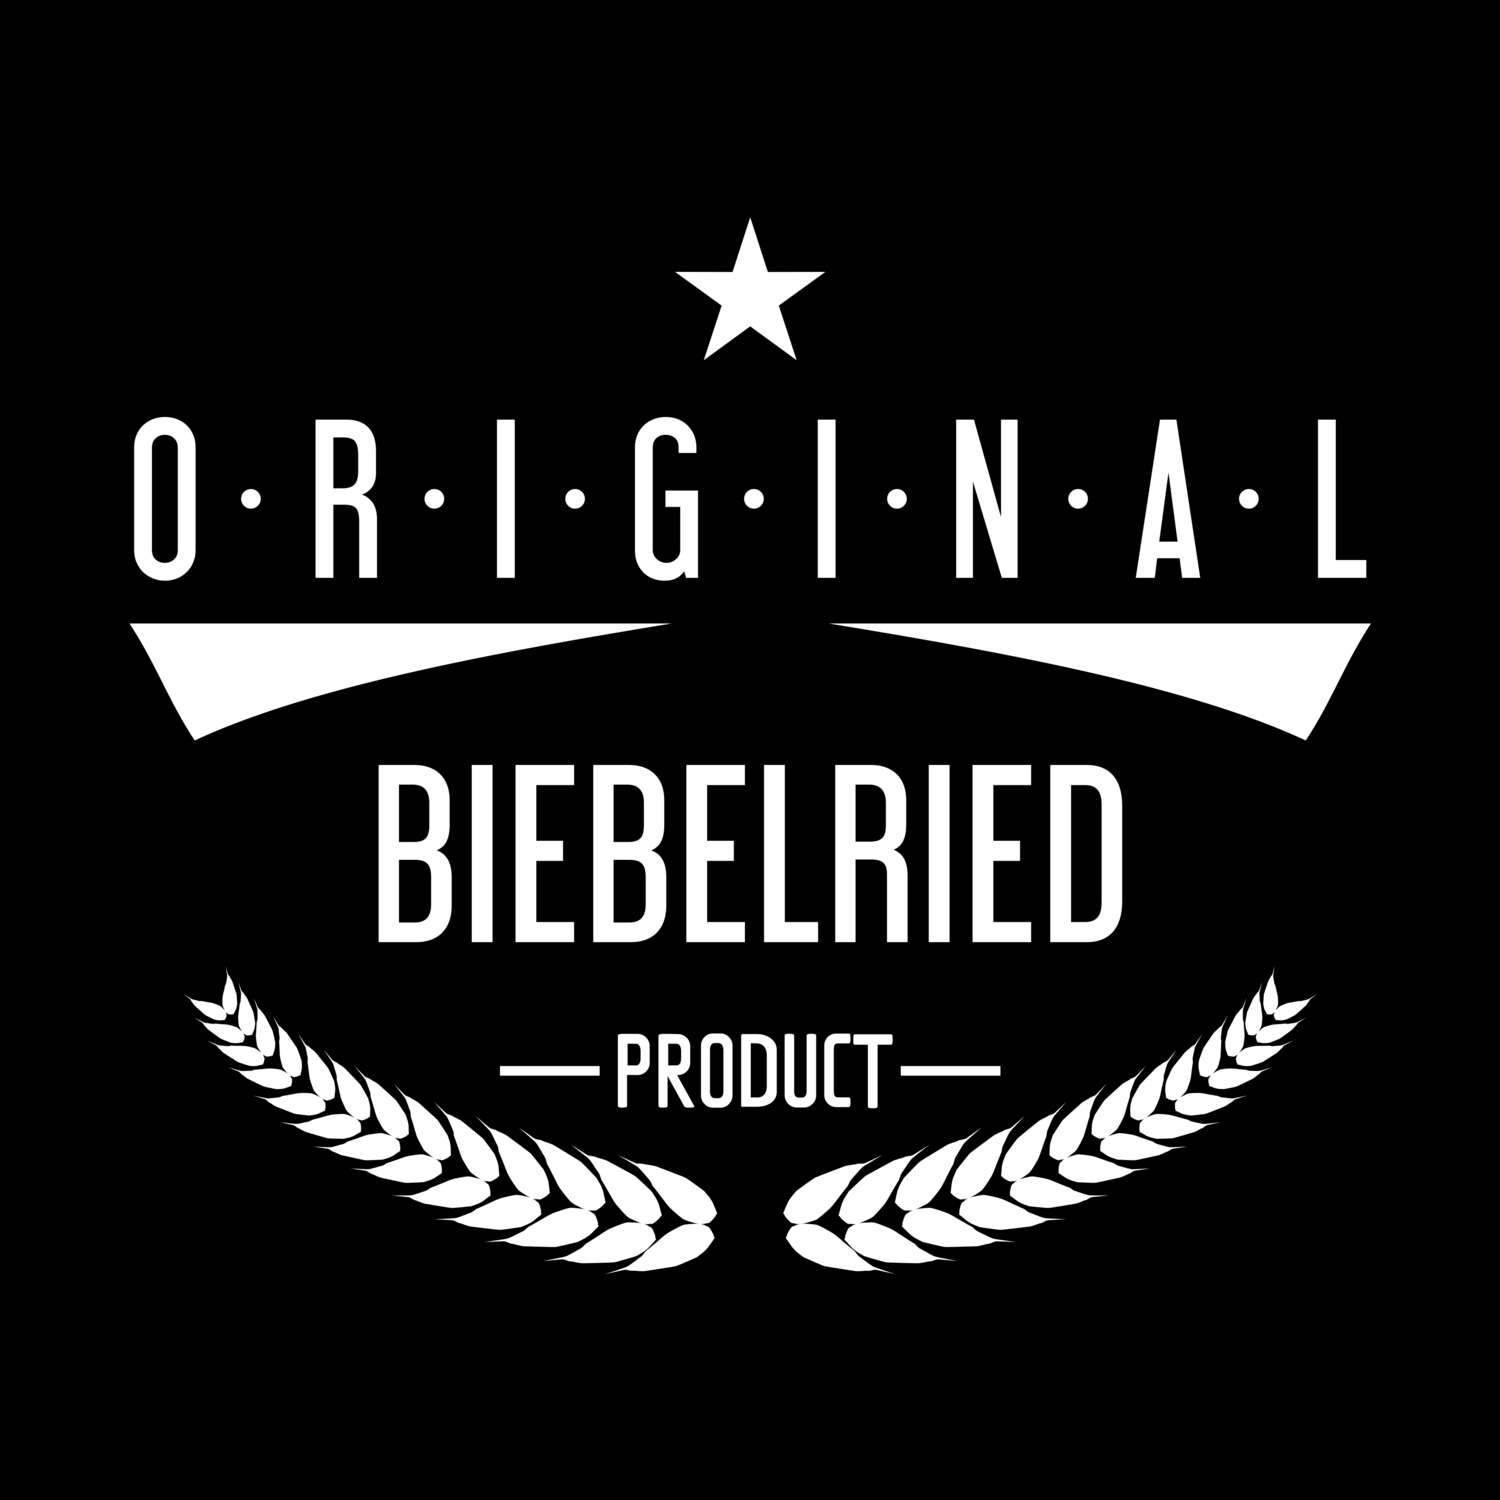 Biebelried T-Shirt »Original Product«